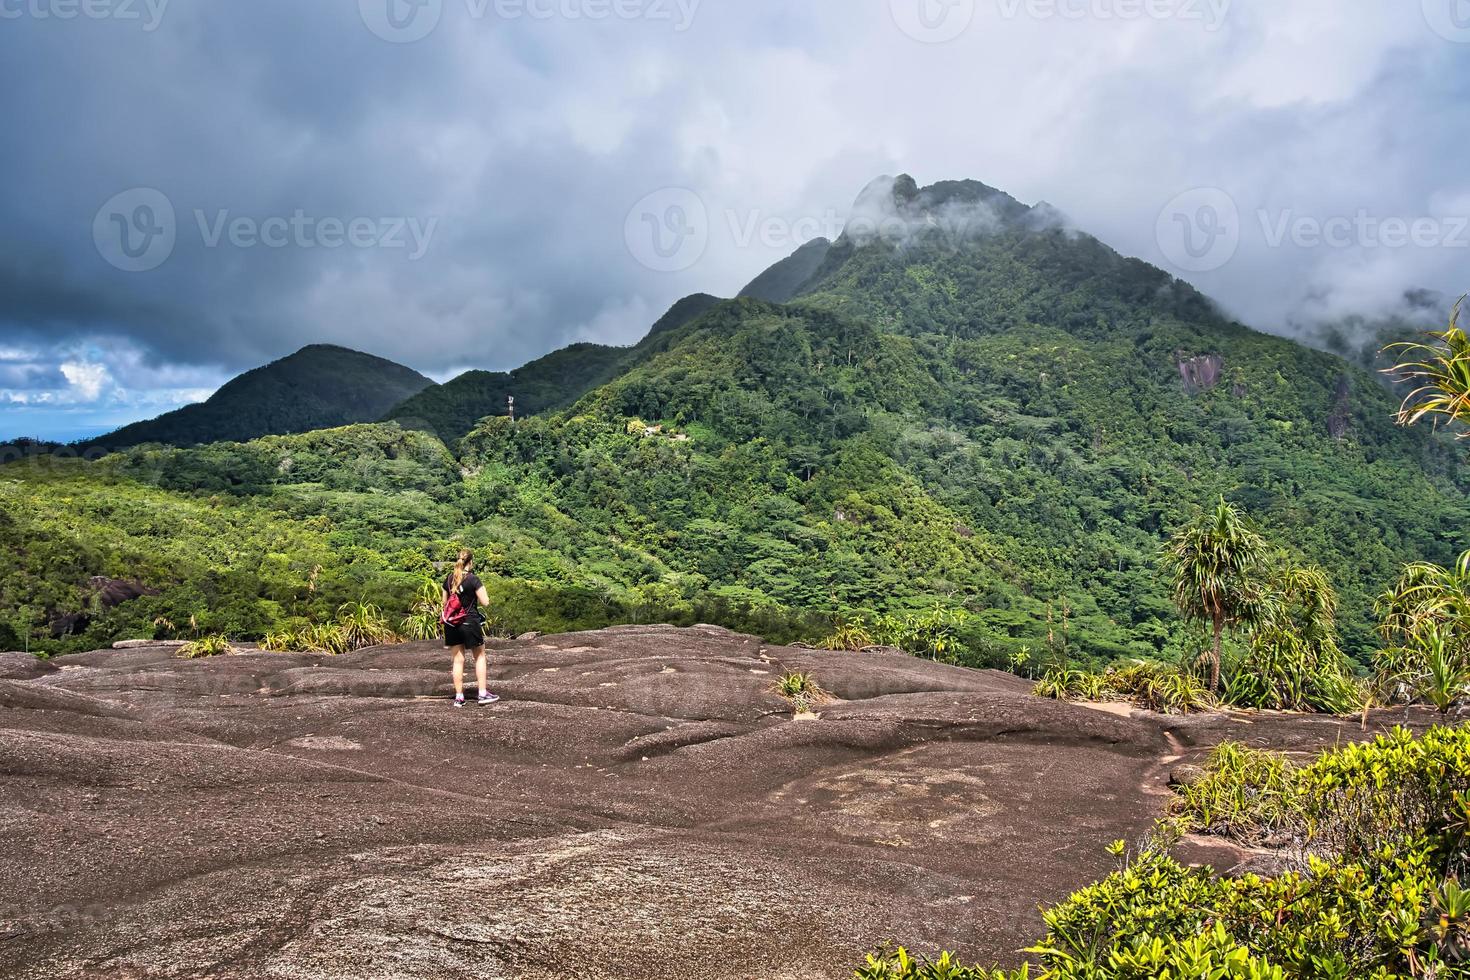 copolia trilha jovem mulher wating seychelles Altíssima montanha, manhã seichelense mahe seychelles foto